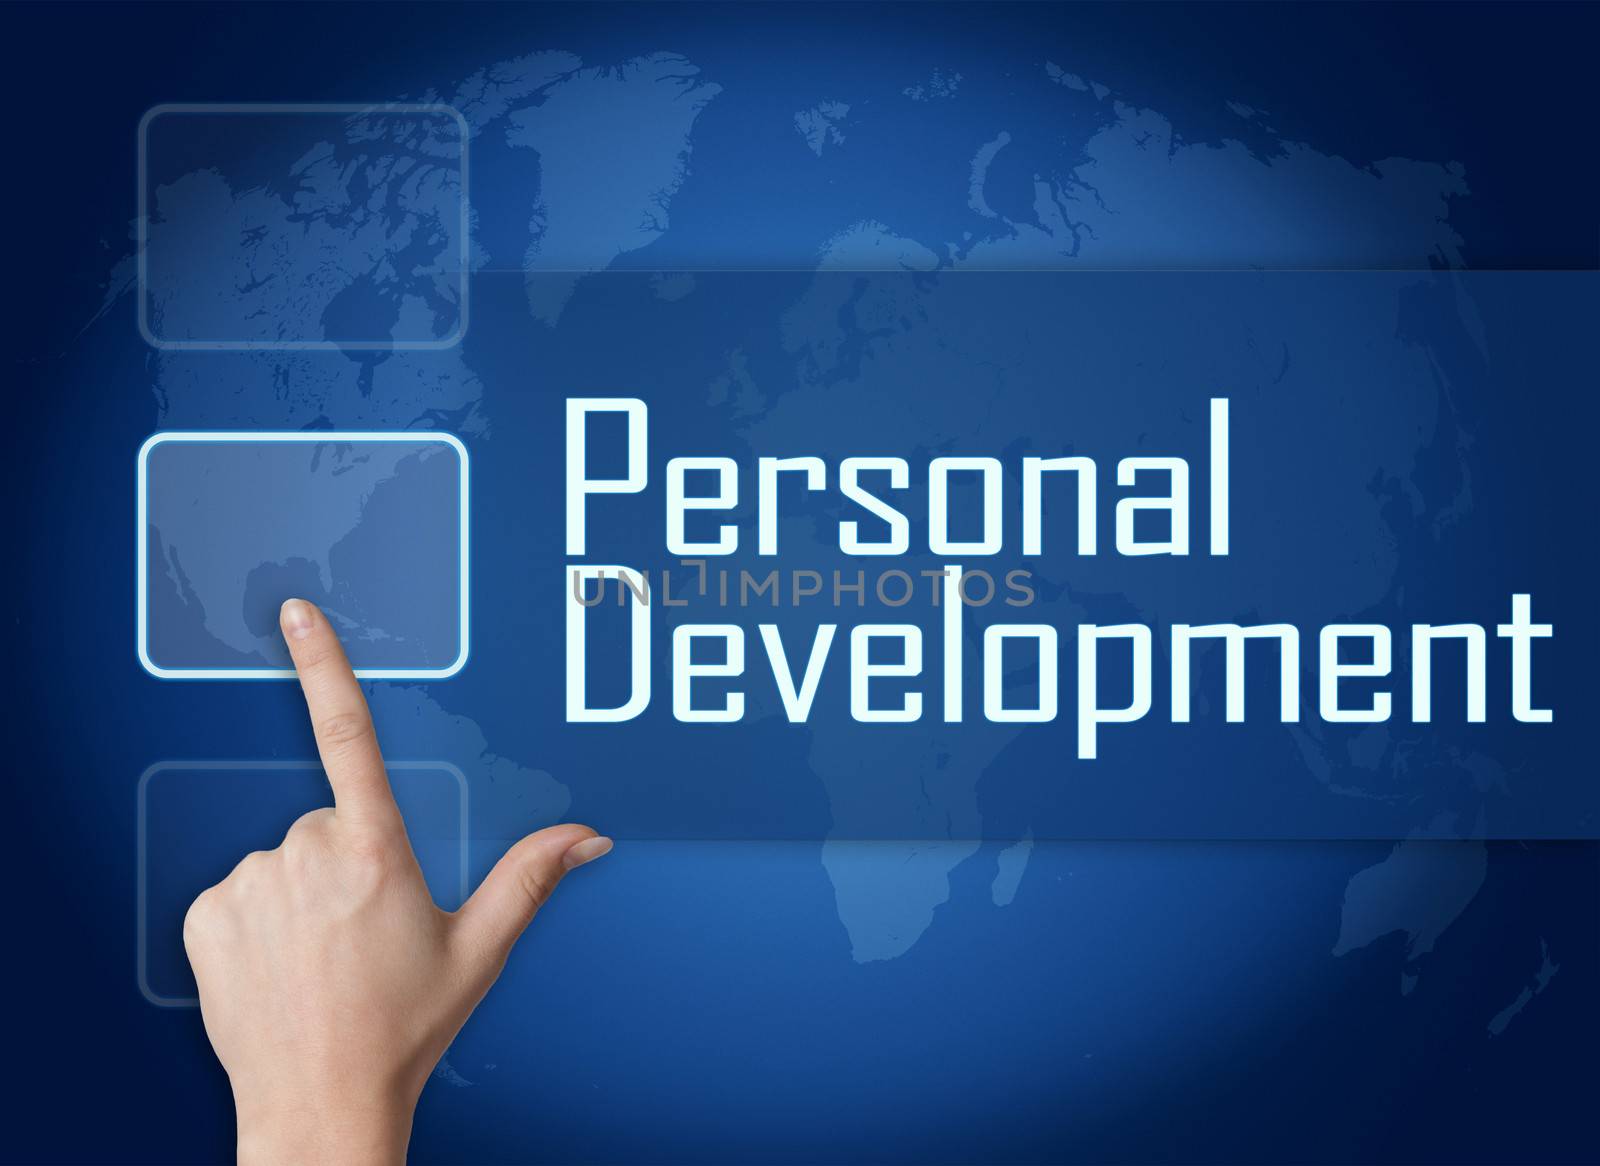 Personal Development by Mazirama